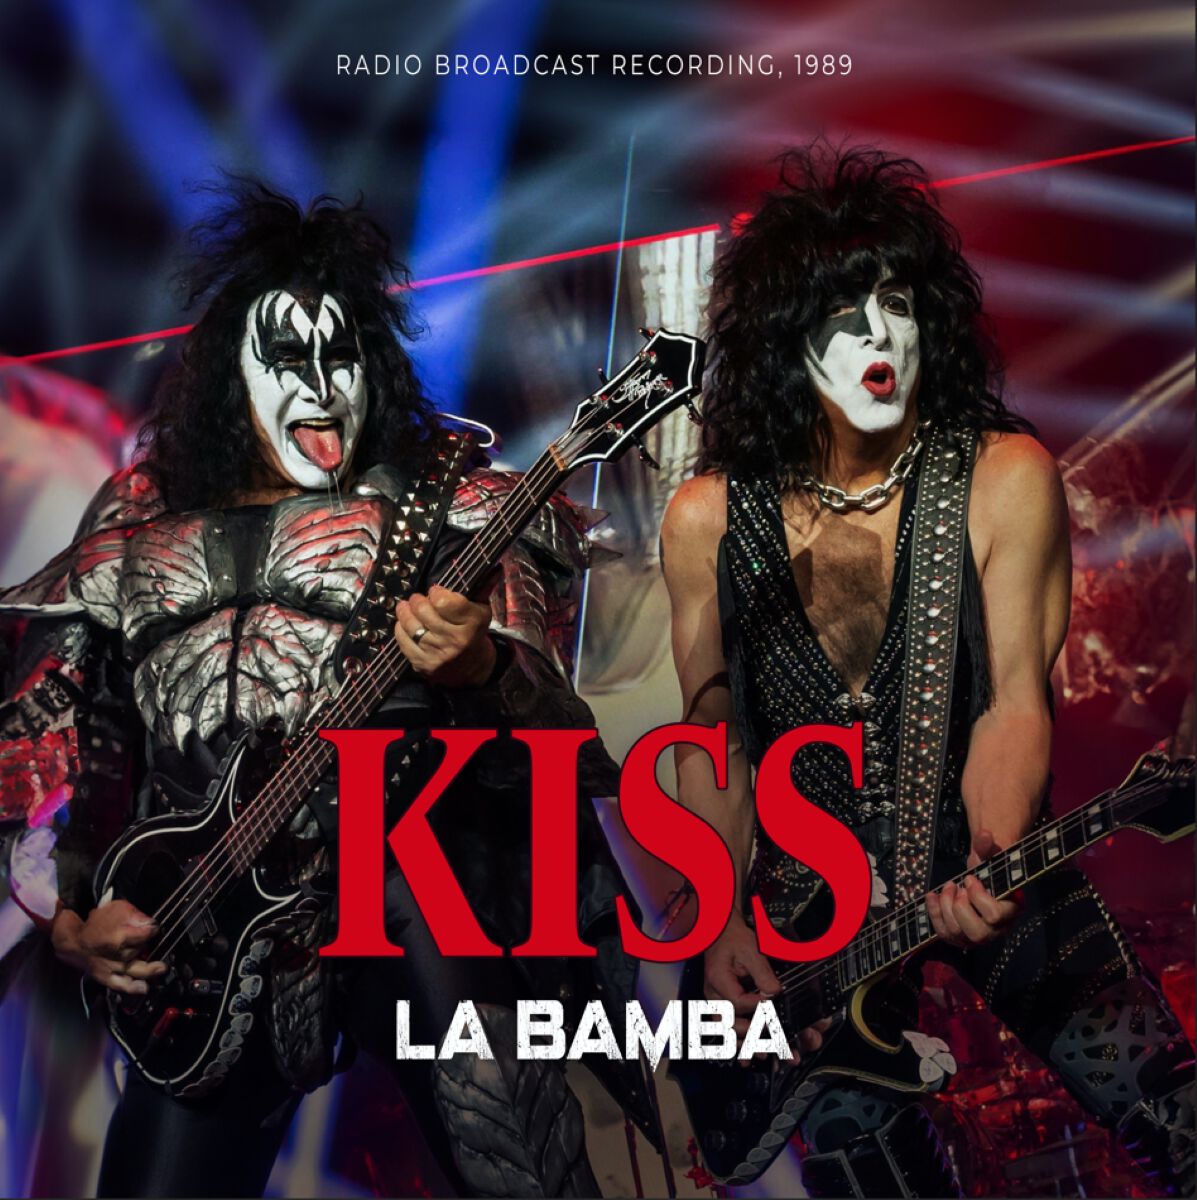 La Bamba / Broadcast 1989 von Kiss - LP (Limited Edition, Picture, Standard)